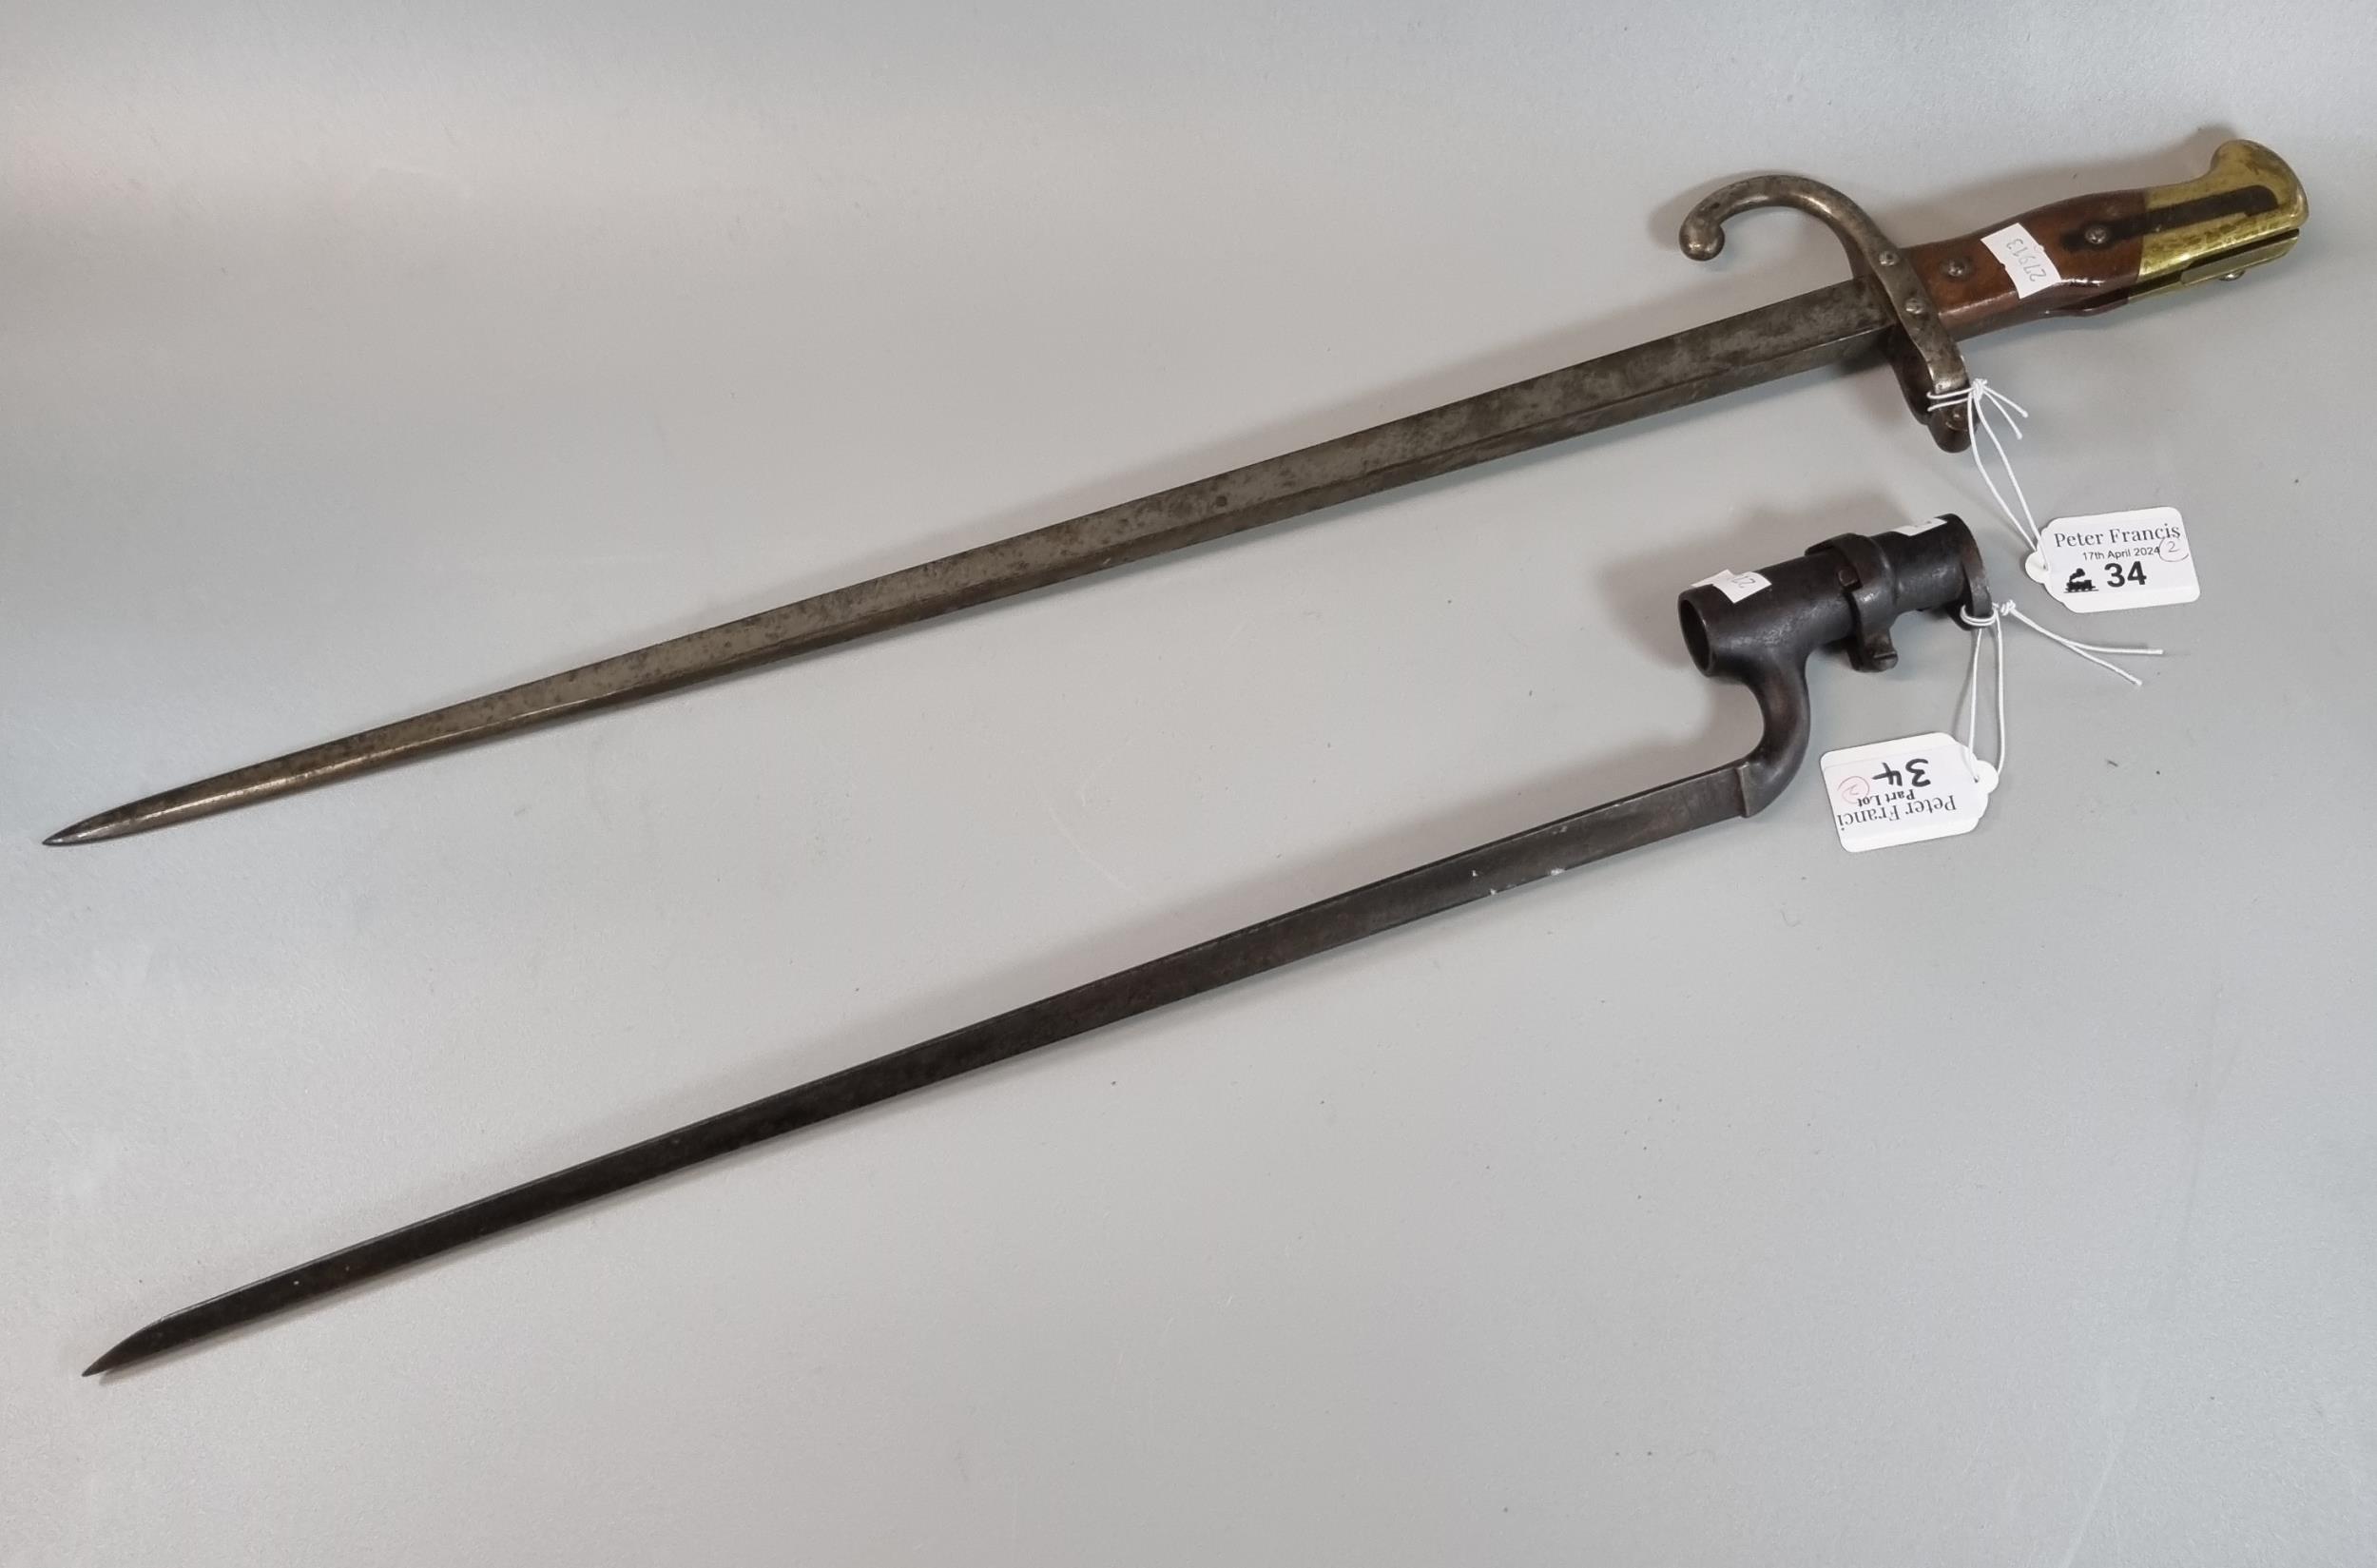 19th century triangular bladed spike bayonet together with a 19th century French sword bayonet